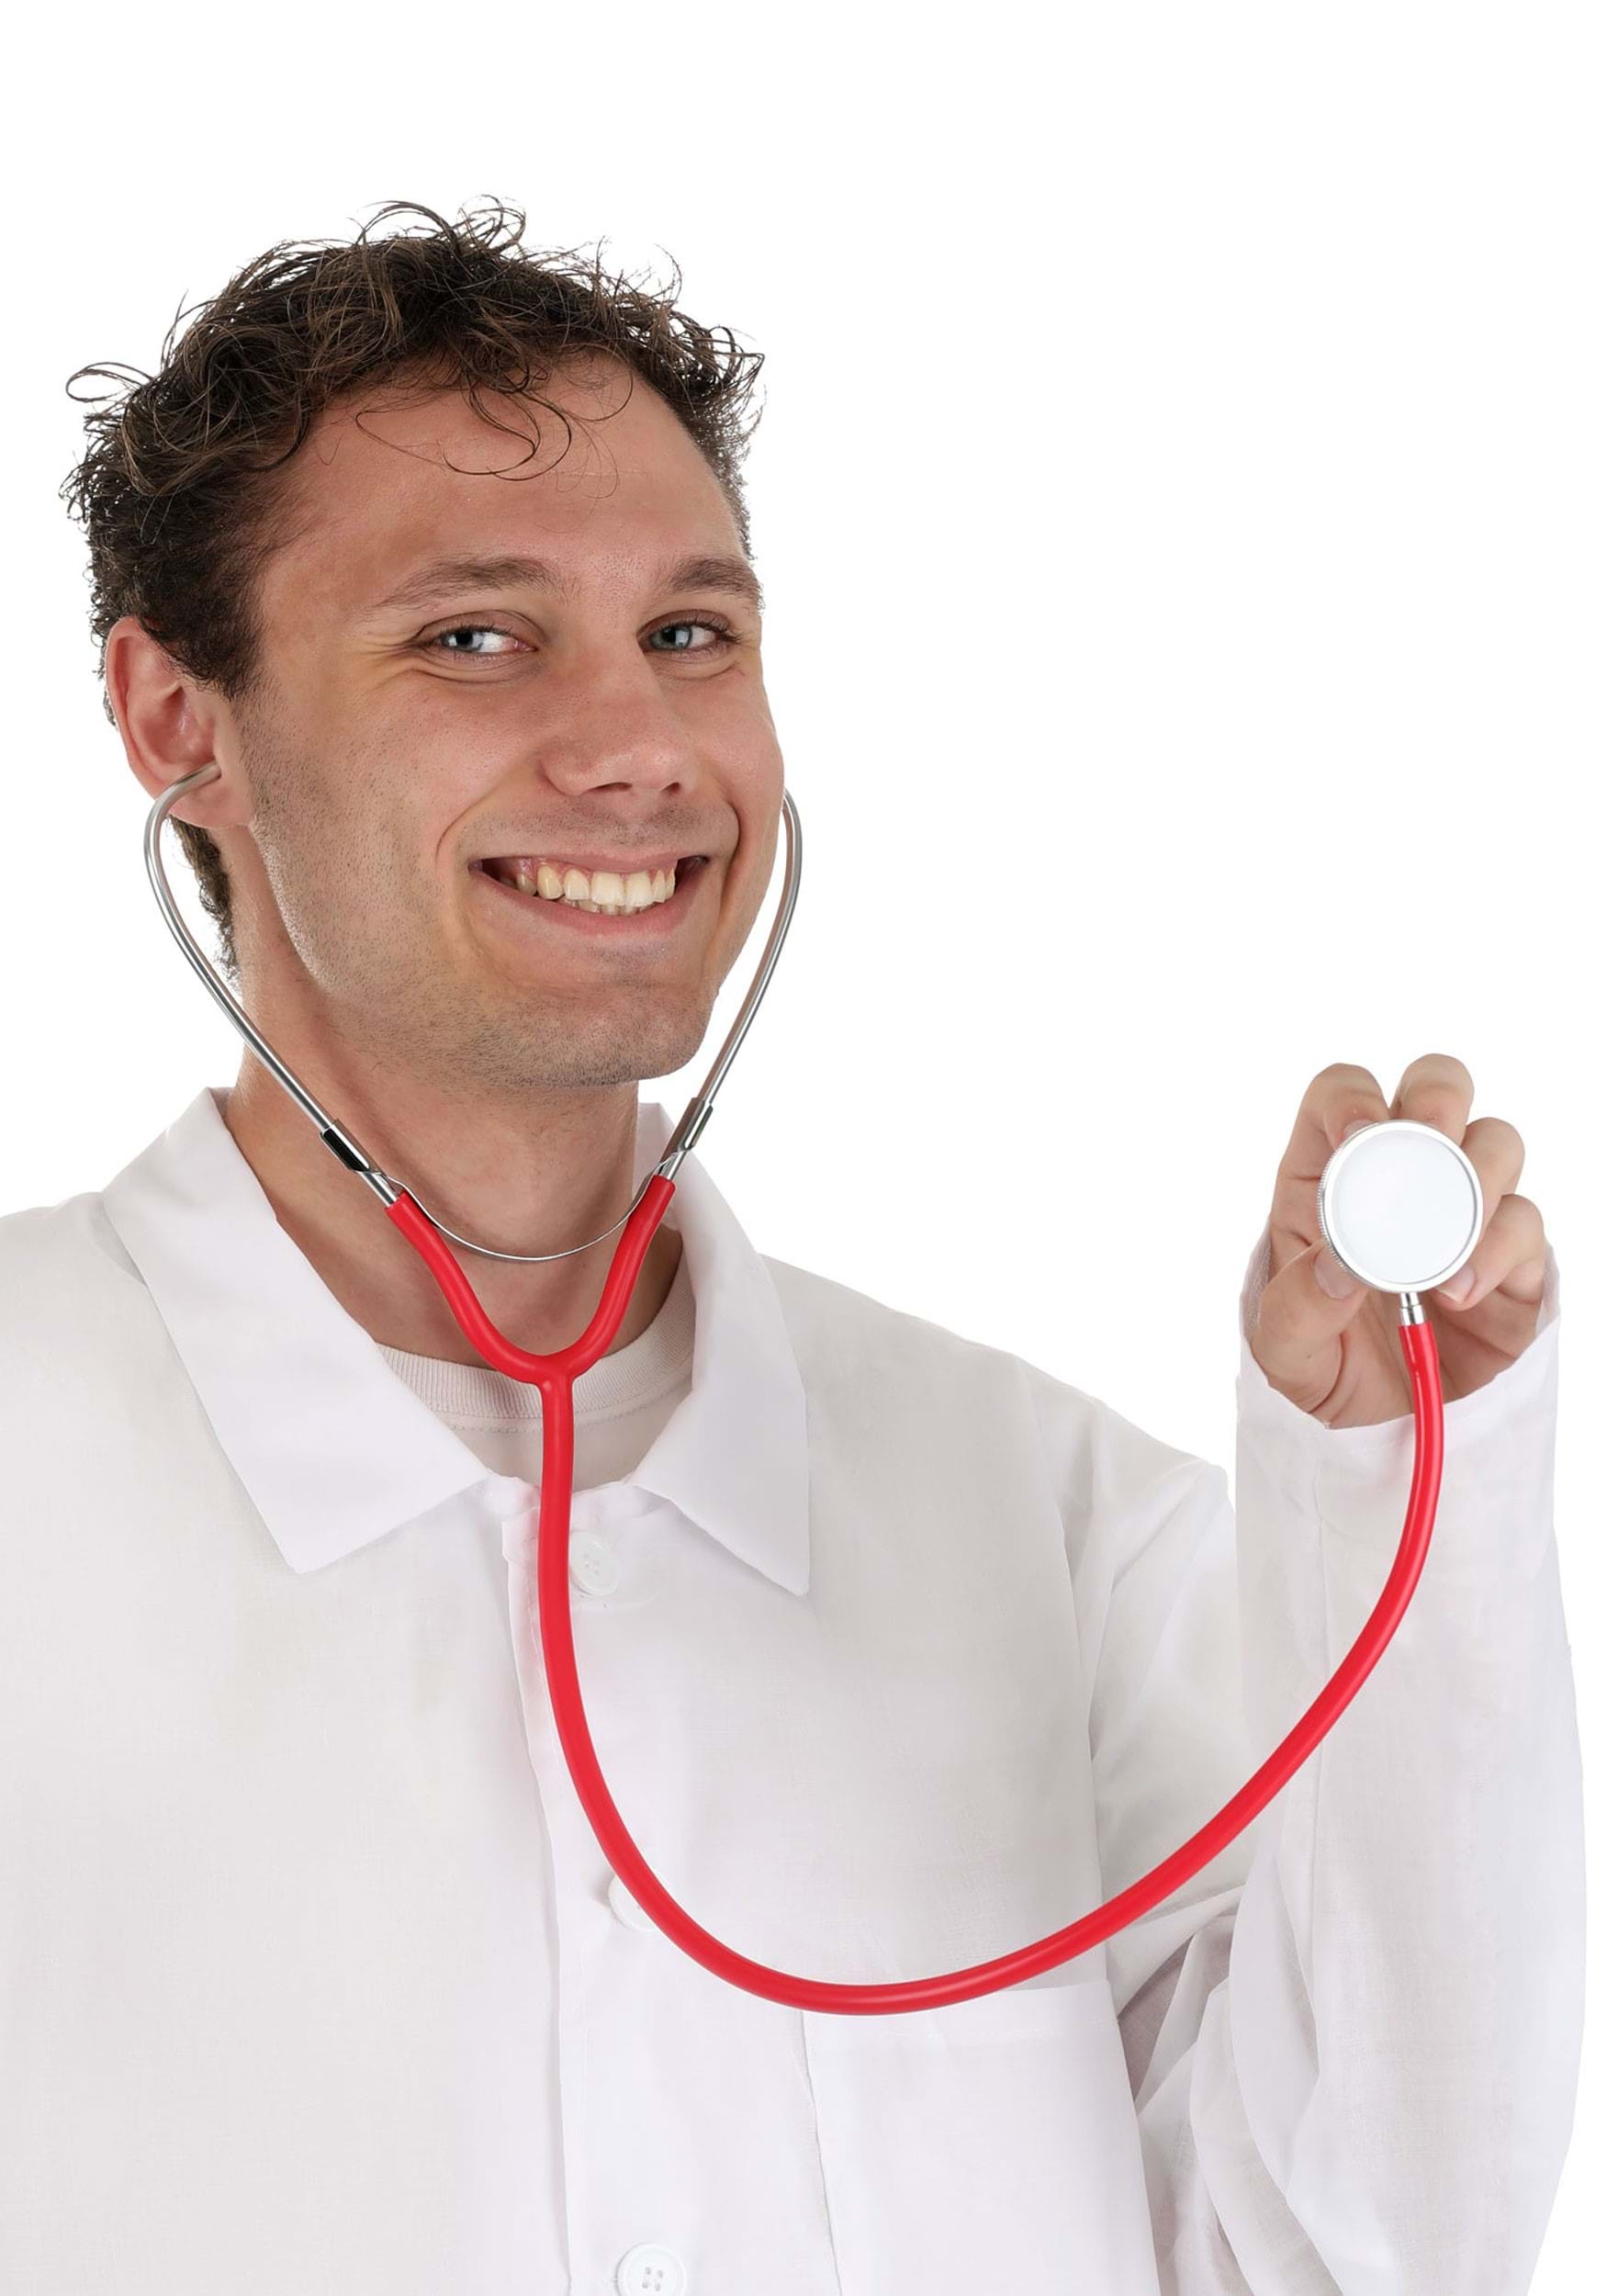 Costume Red Stethoscope